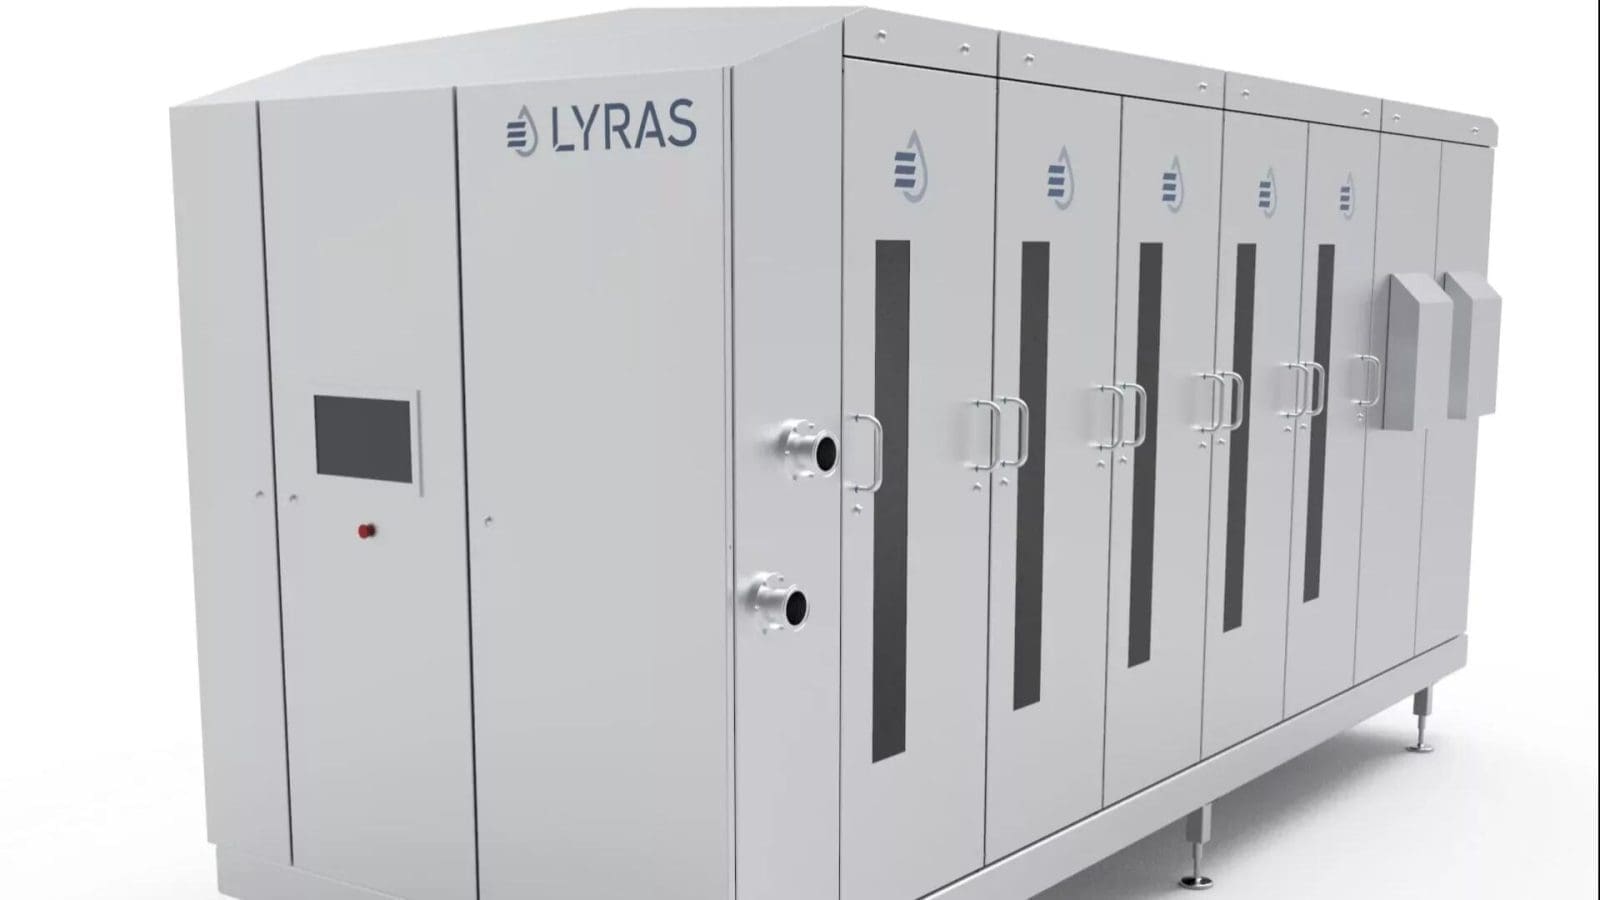 Lyras unveils the world’s largest UV treatment unit revolutionizing liquid food processing